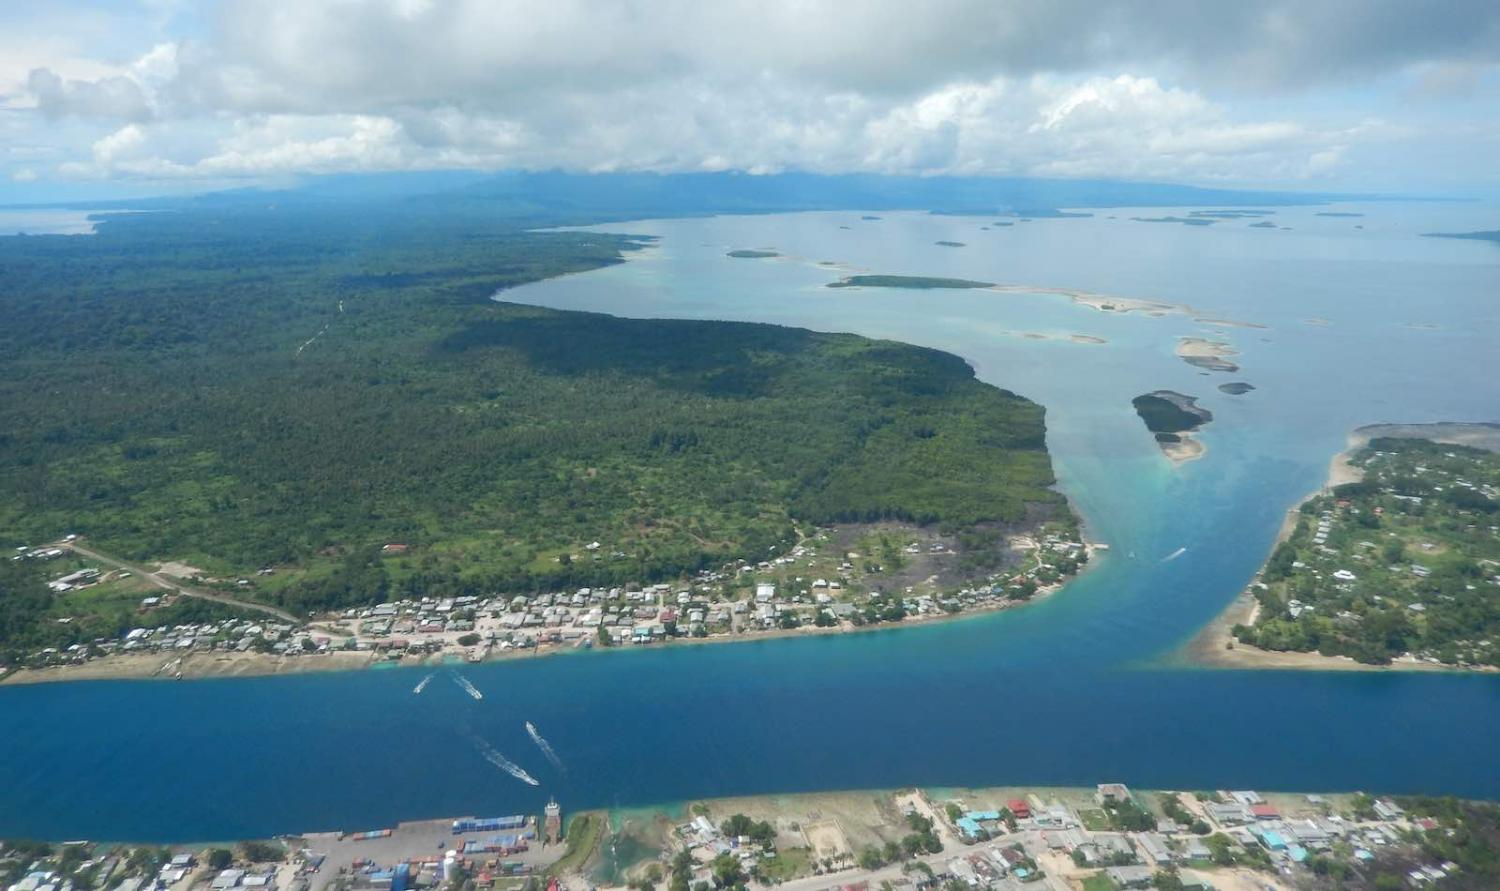 Buka, Capital of Bougainville (photo credit: Annmaree O'Keeffe)